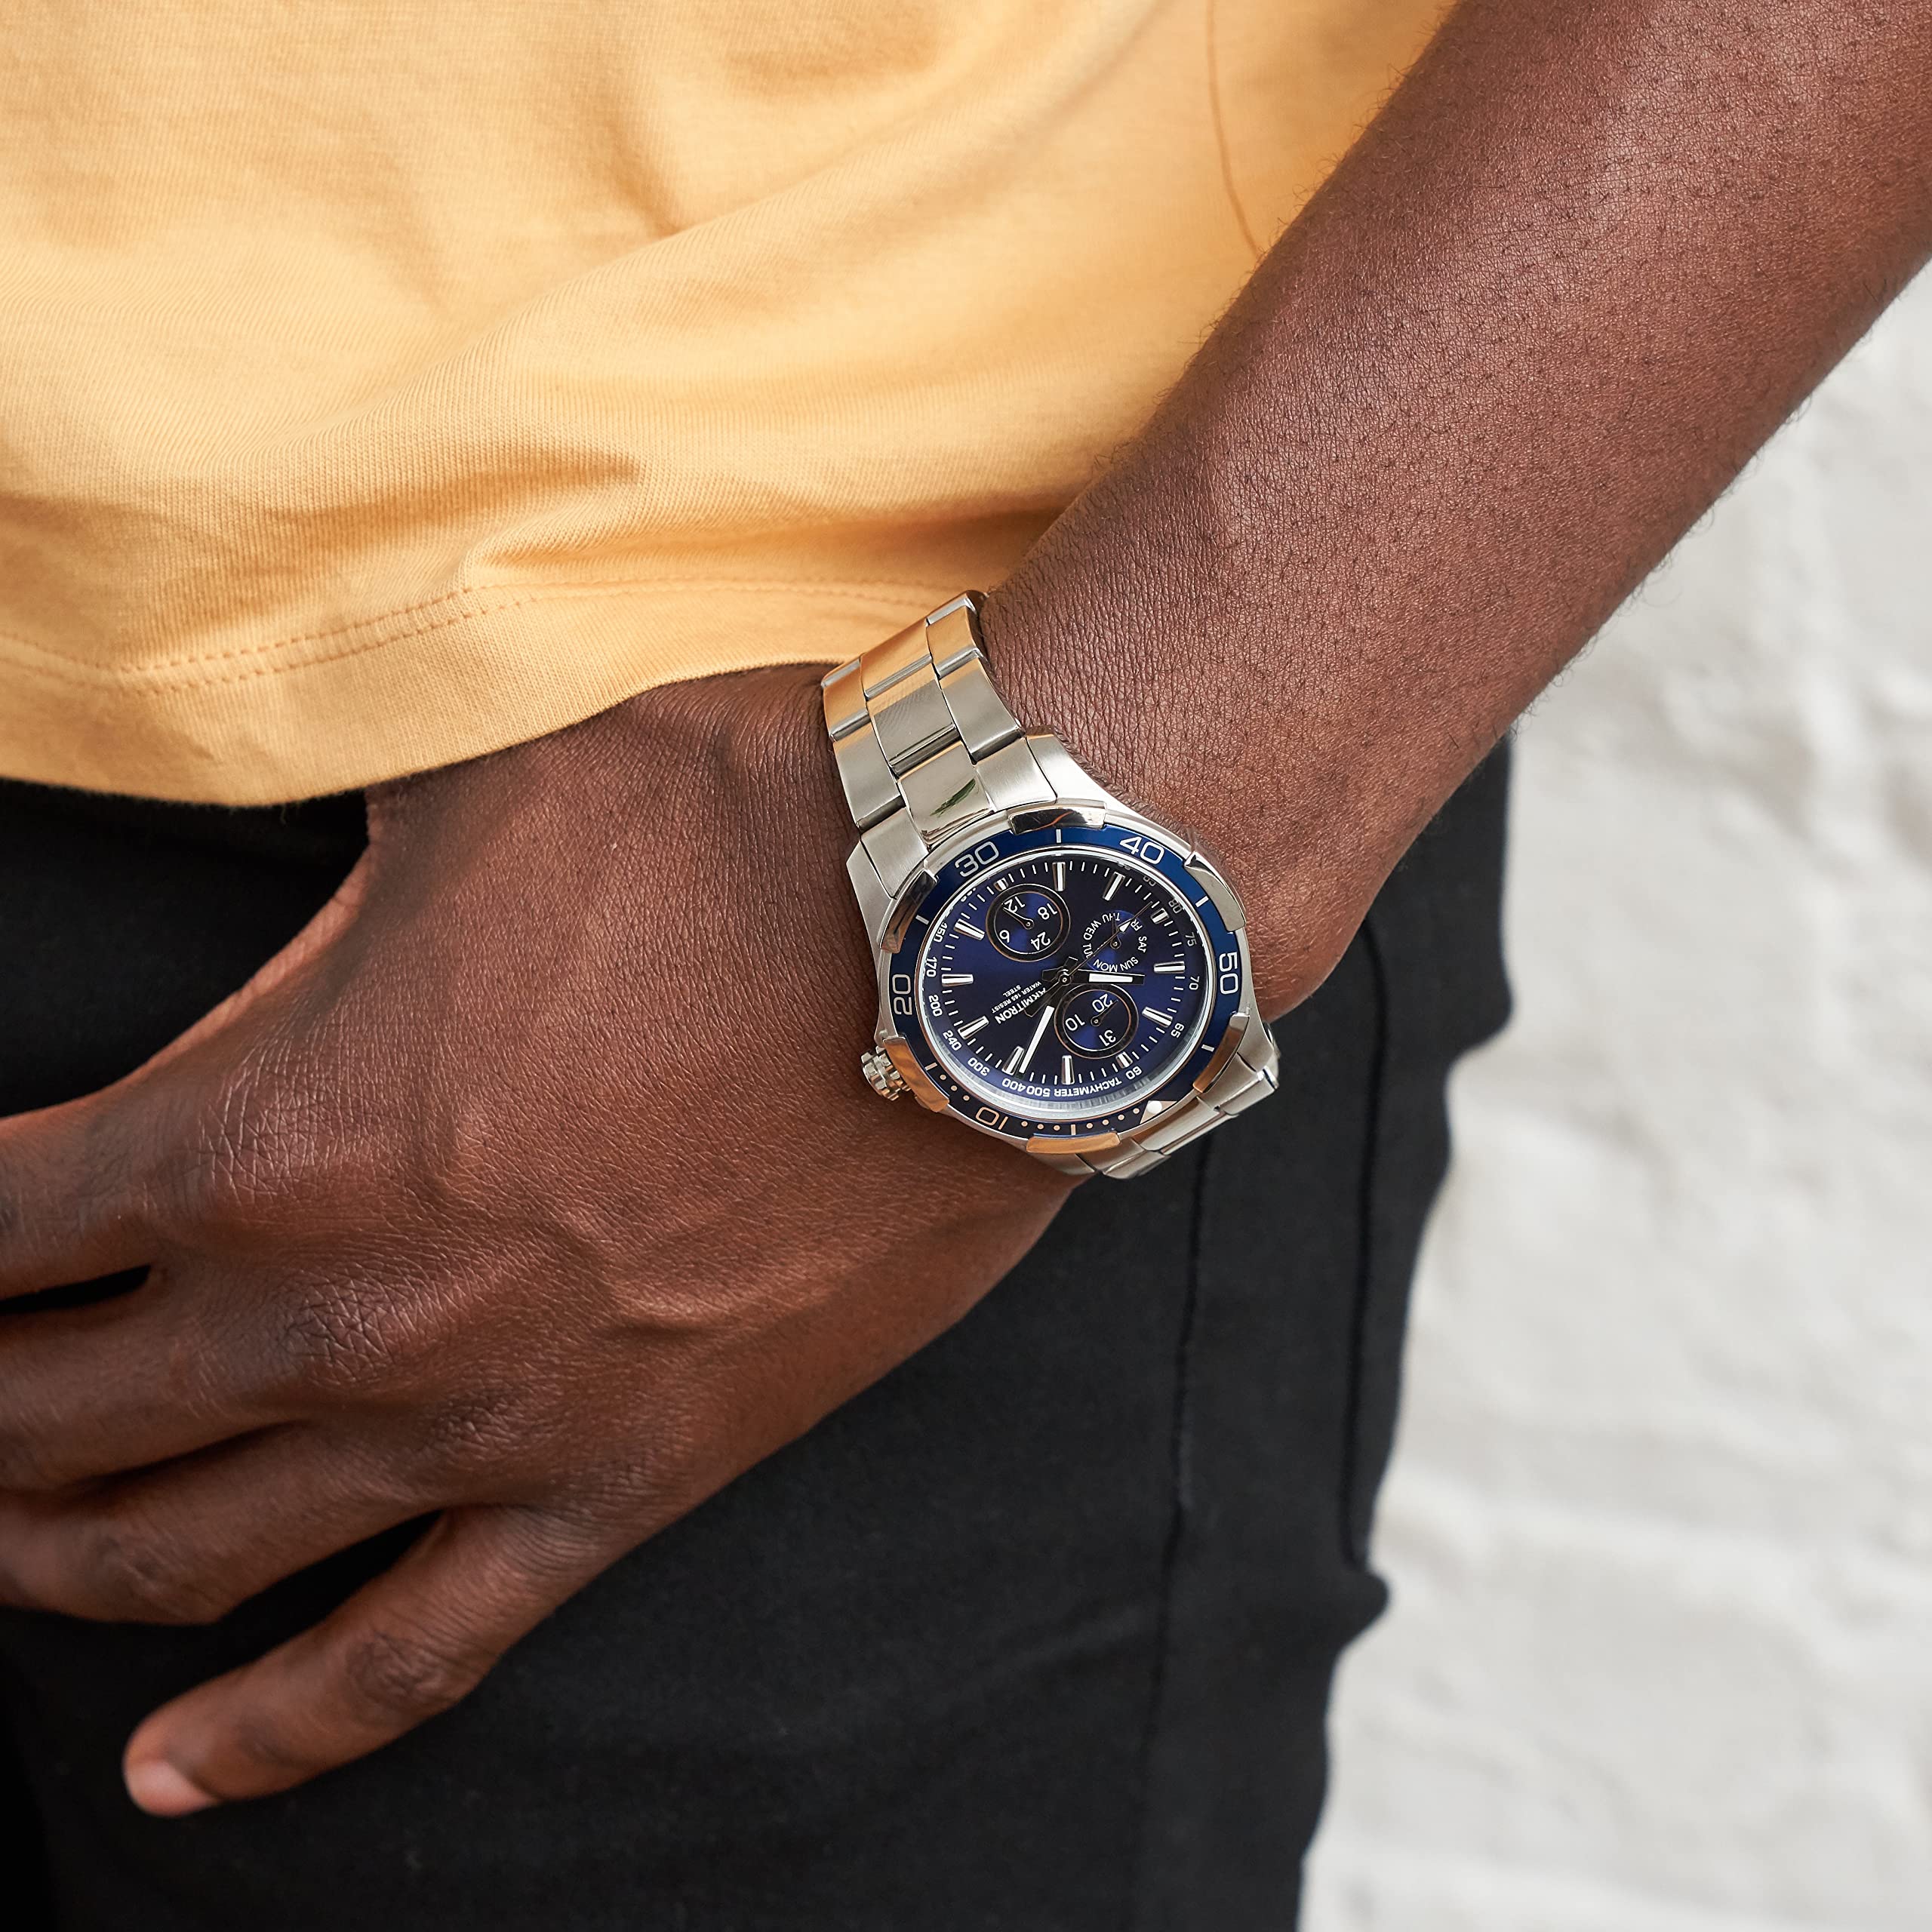 Armitron Men's Multi-Function Silver-Tone Bracelet Watch, 20/4677